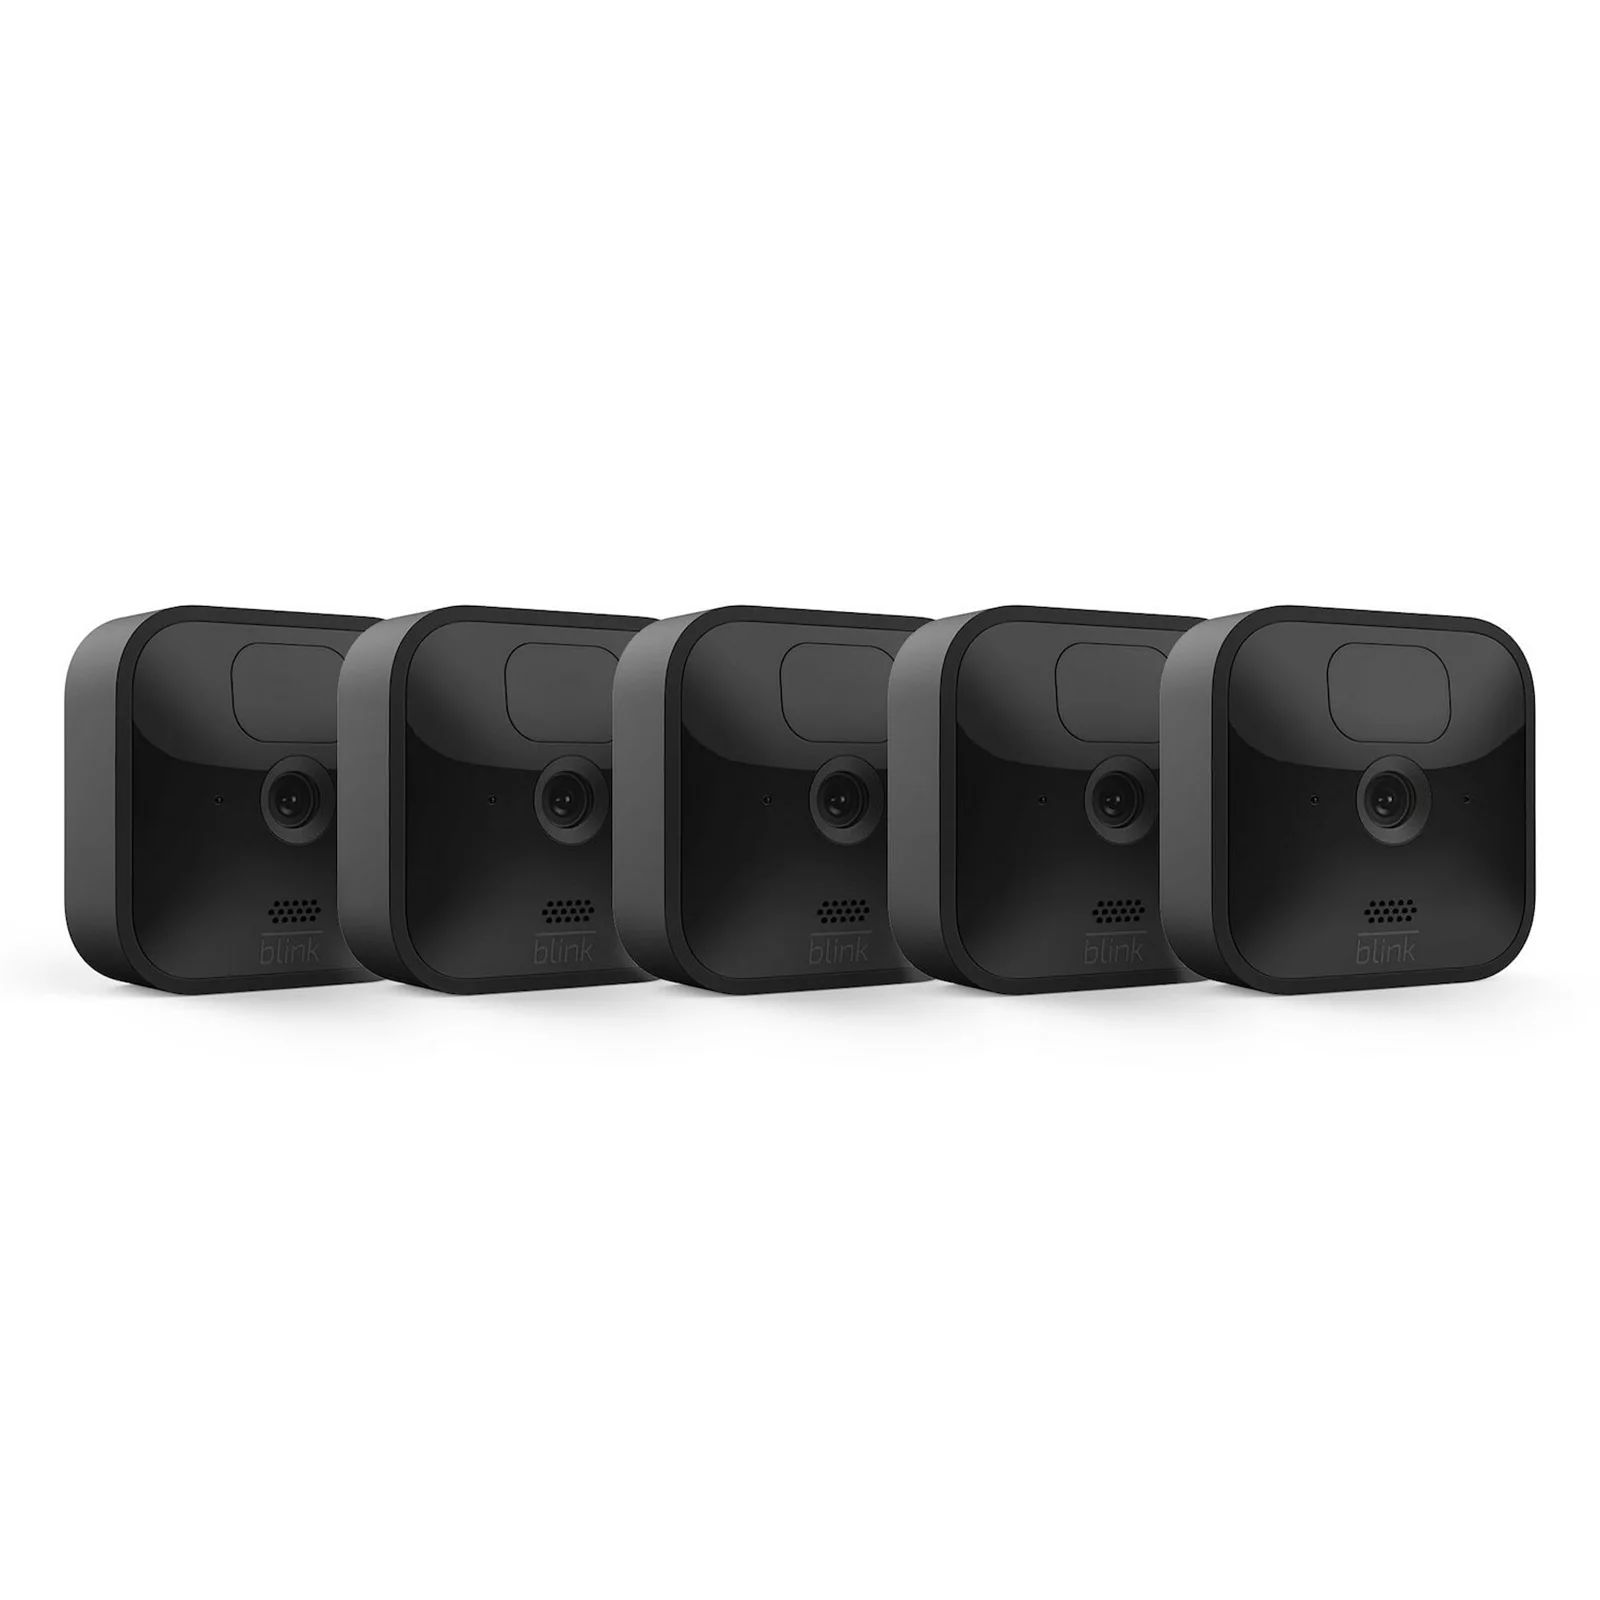 Blink Outdoor 5-cam Security Camera System, Black | Kohl's